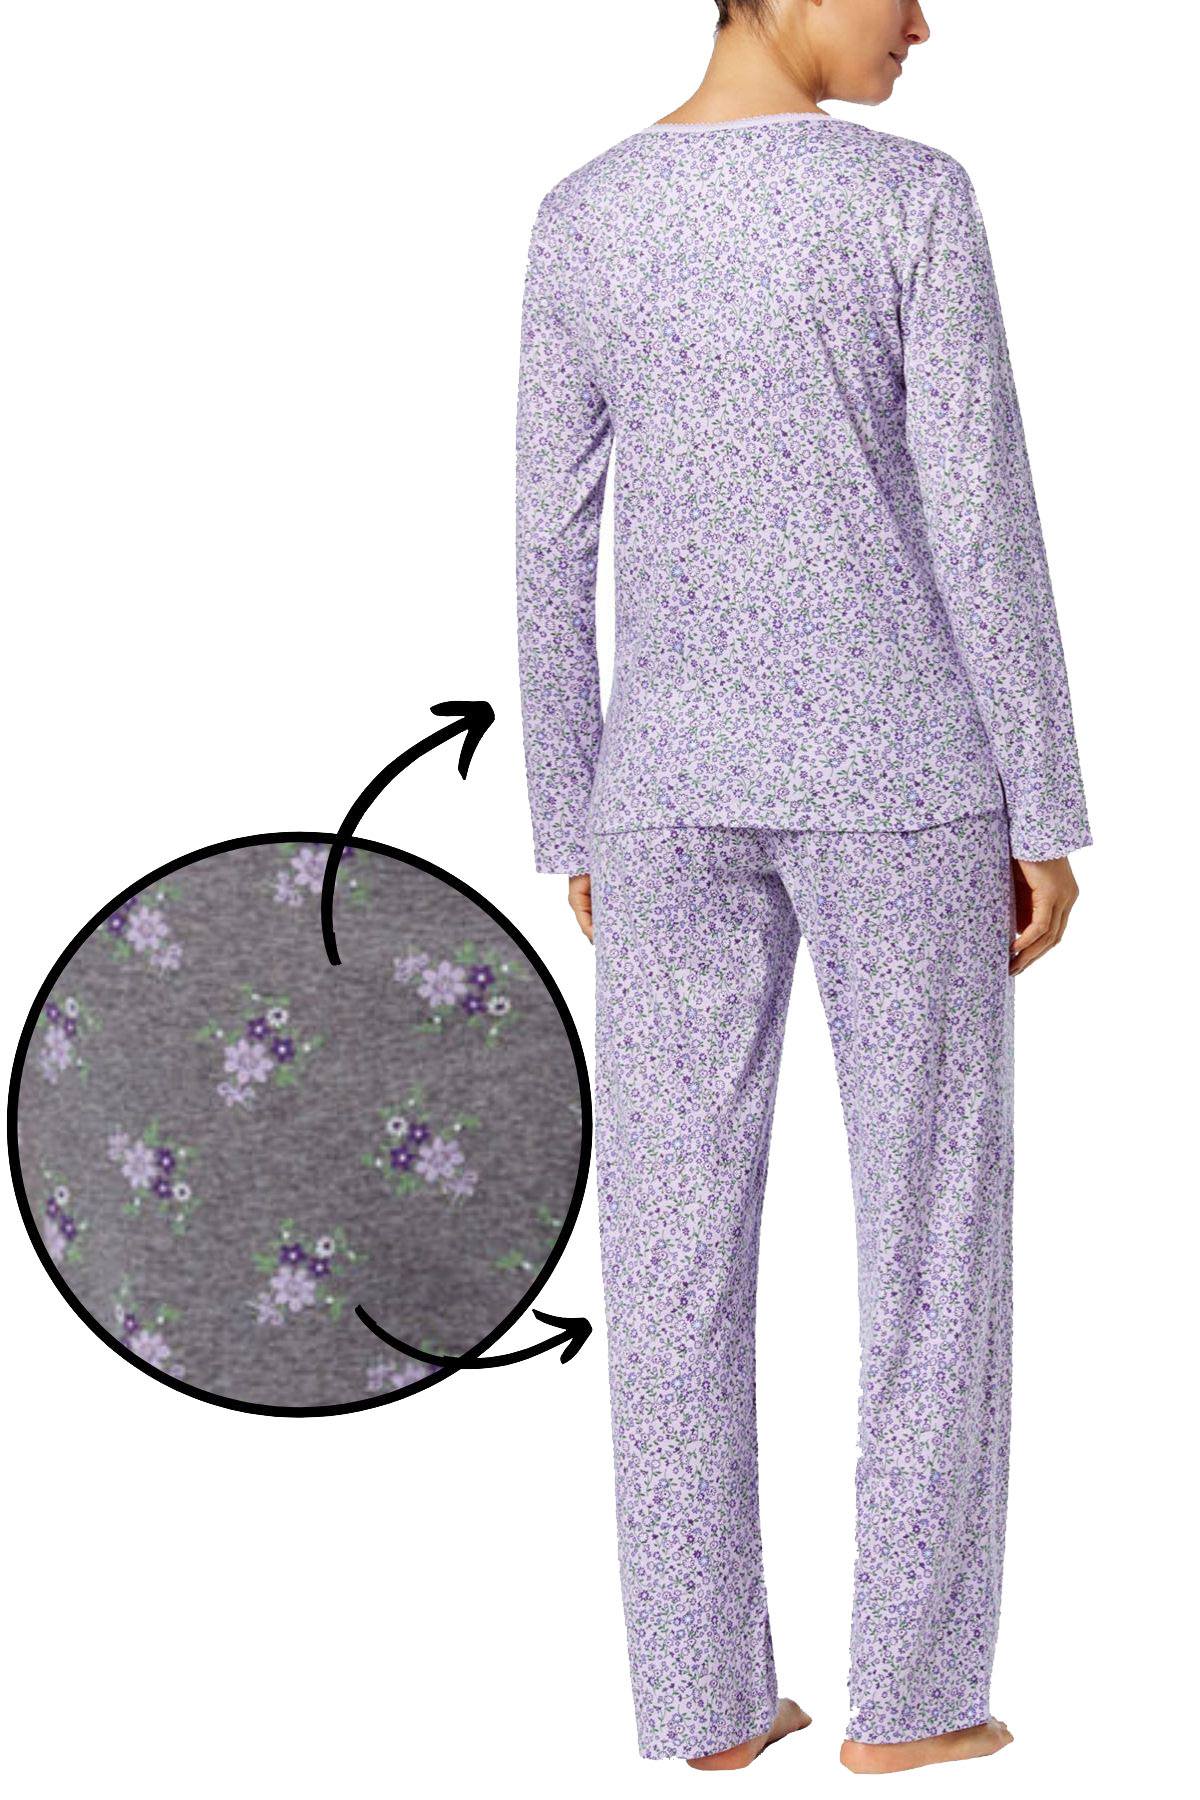 Charter Club Intimates Grey Lace-Floral Printed 2pc Pajama Set